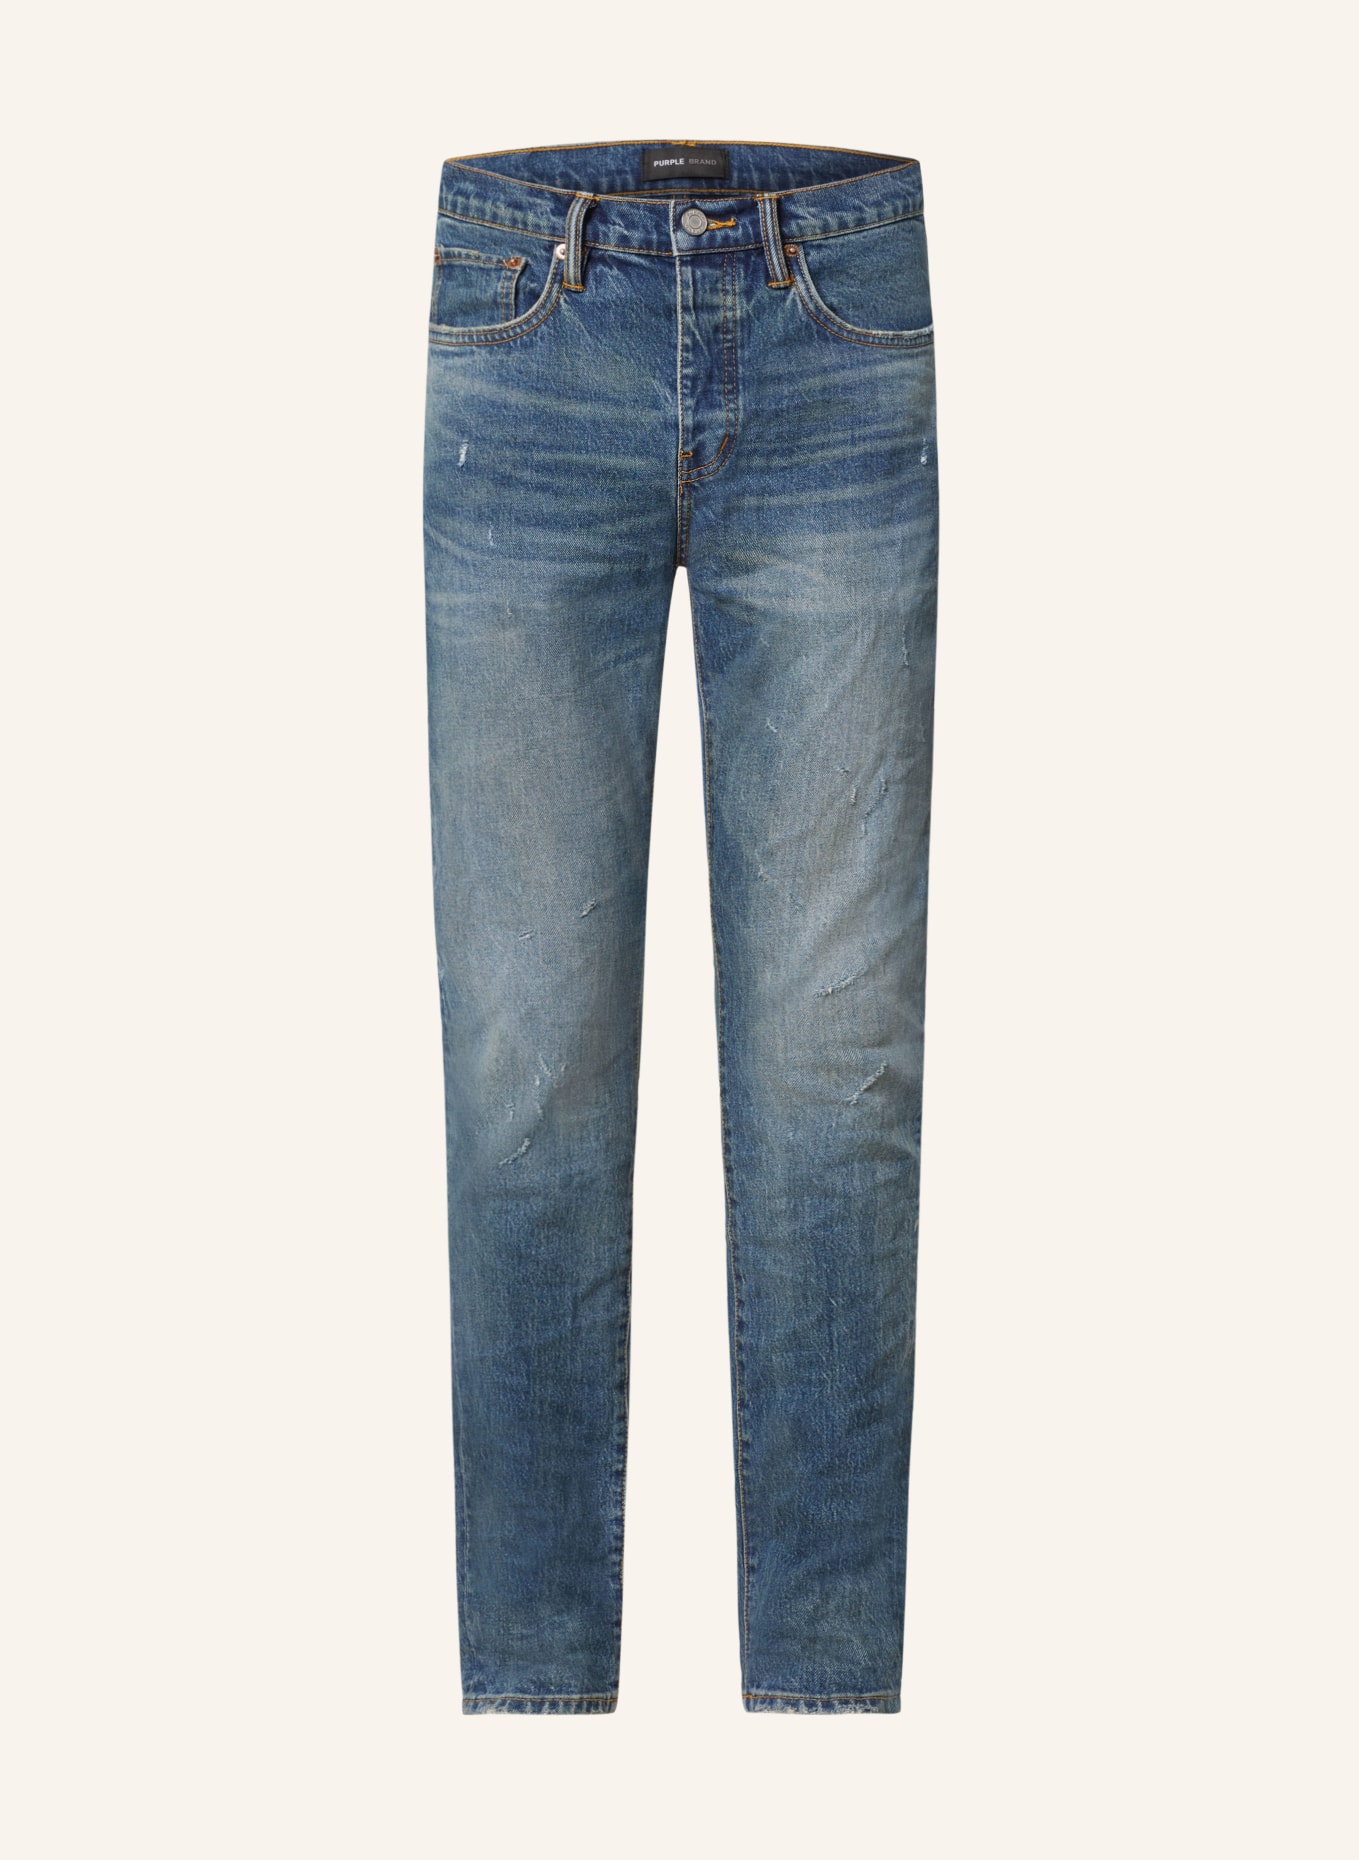 PURPLE BRAND Destroyed Jeans Skinny Fit, Farbe: DK INDIGO (Bild 1)